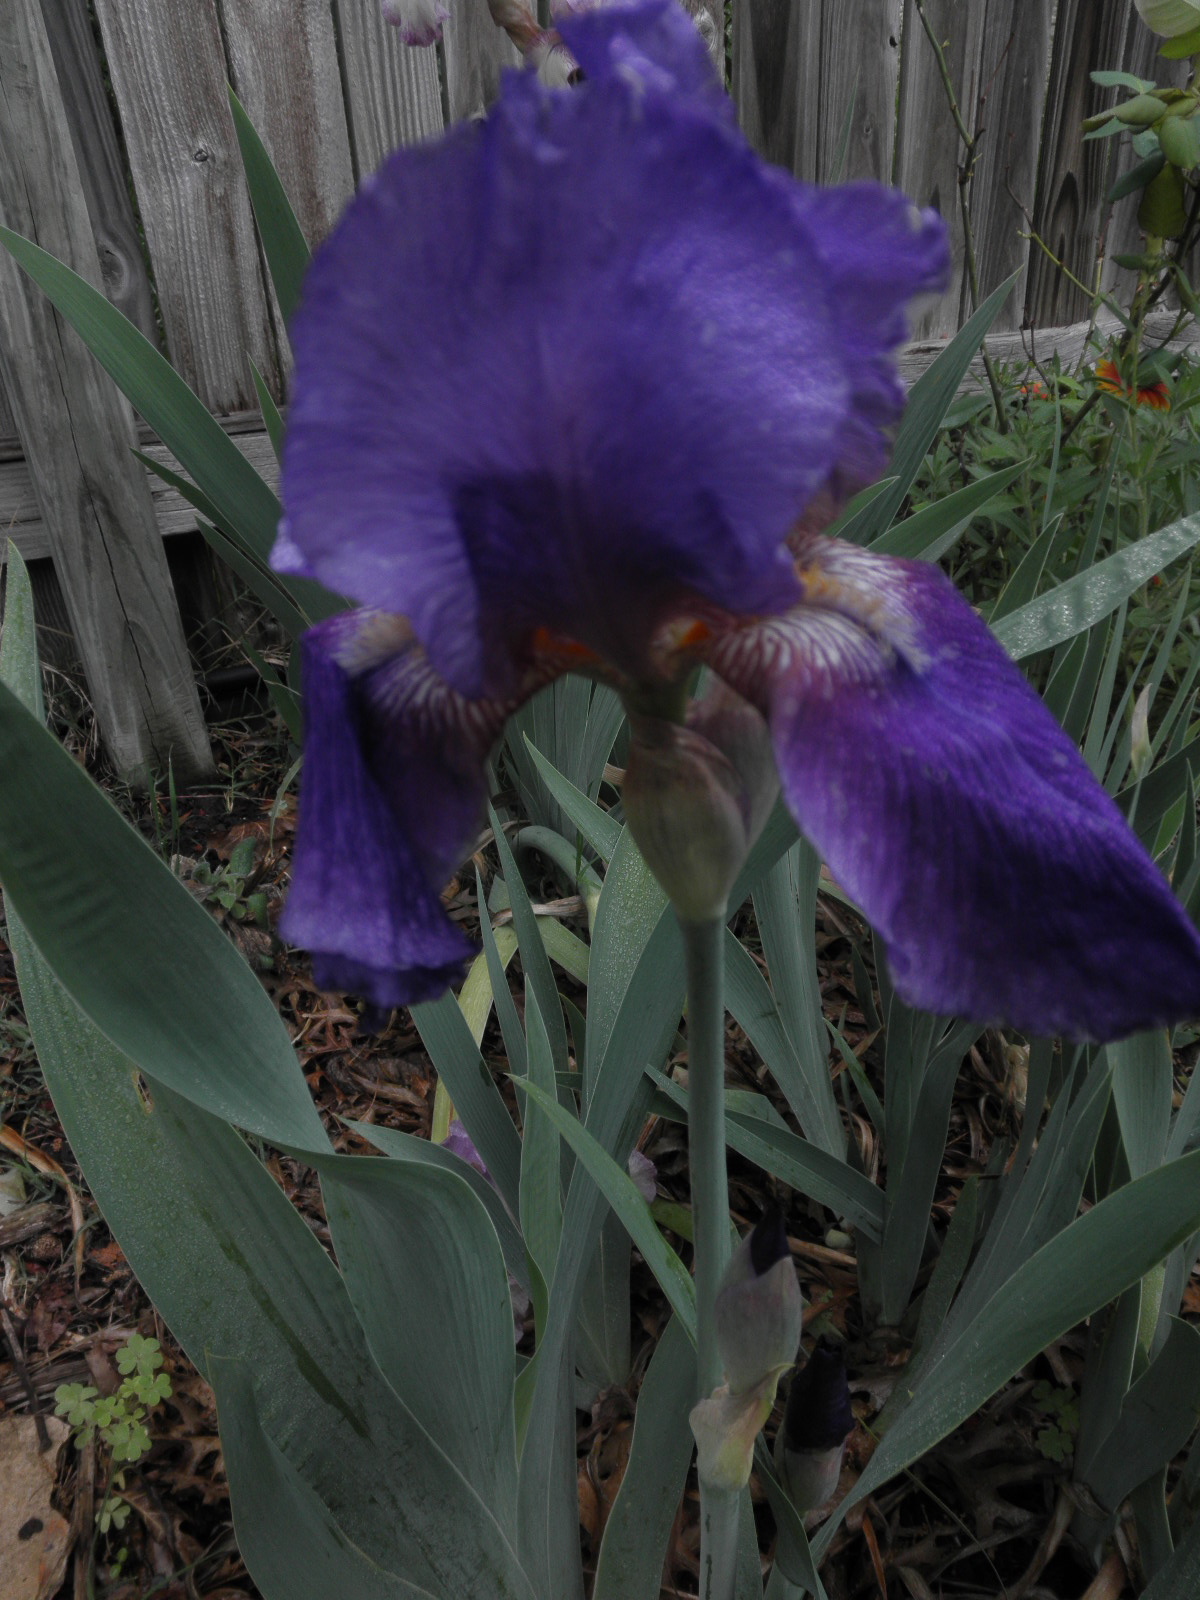 my purple iris